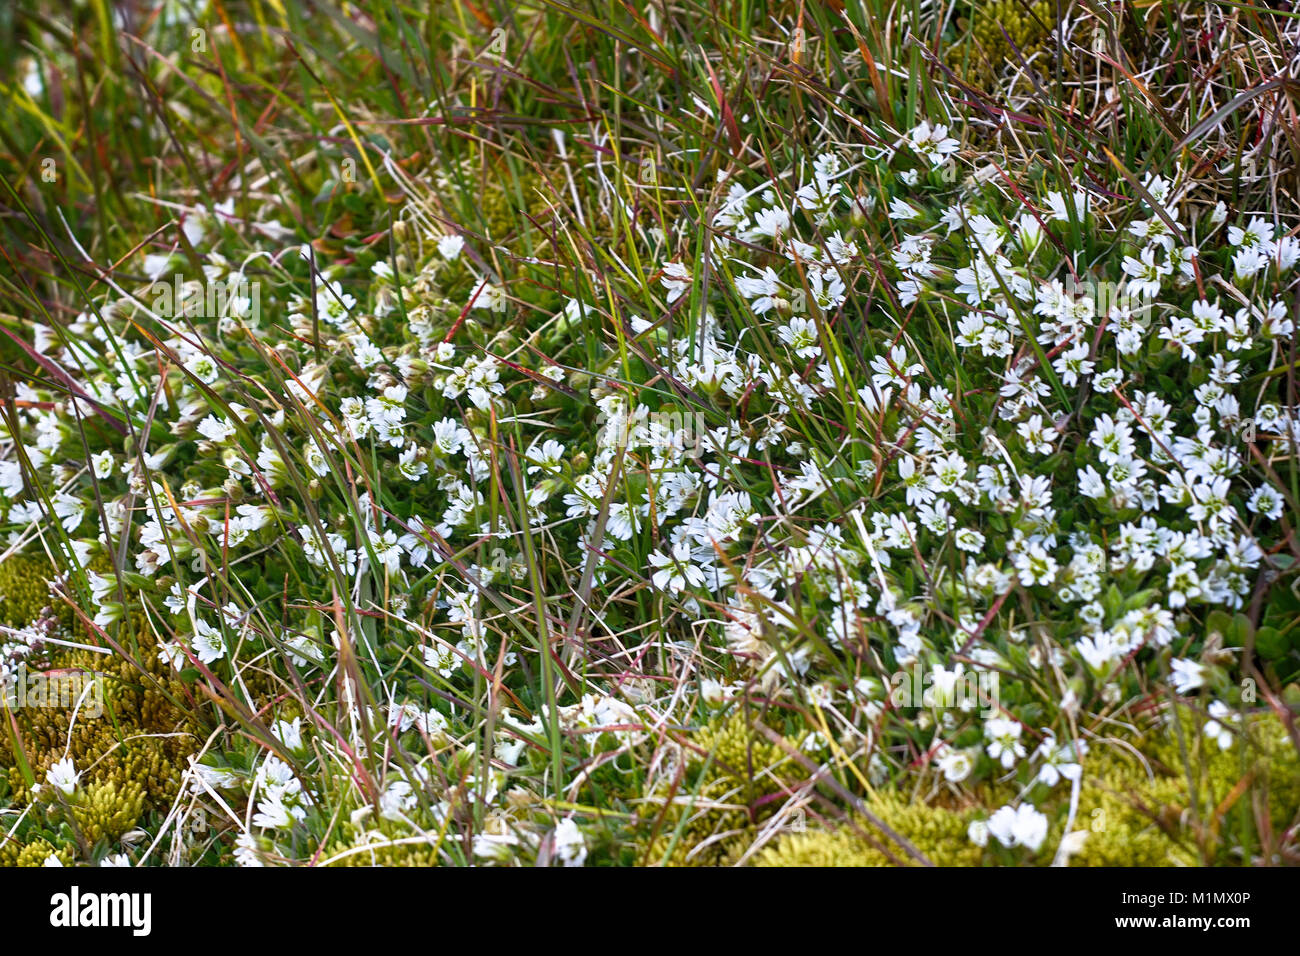 Chickweed (Cerastium arcticum probably Cerastium regelii) as typical element of Arctic cold deserts to 82 degrees North latitude Stock Photo